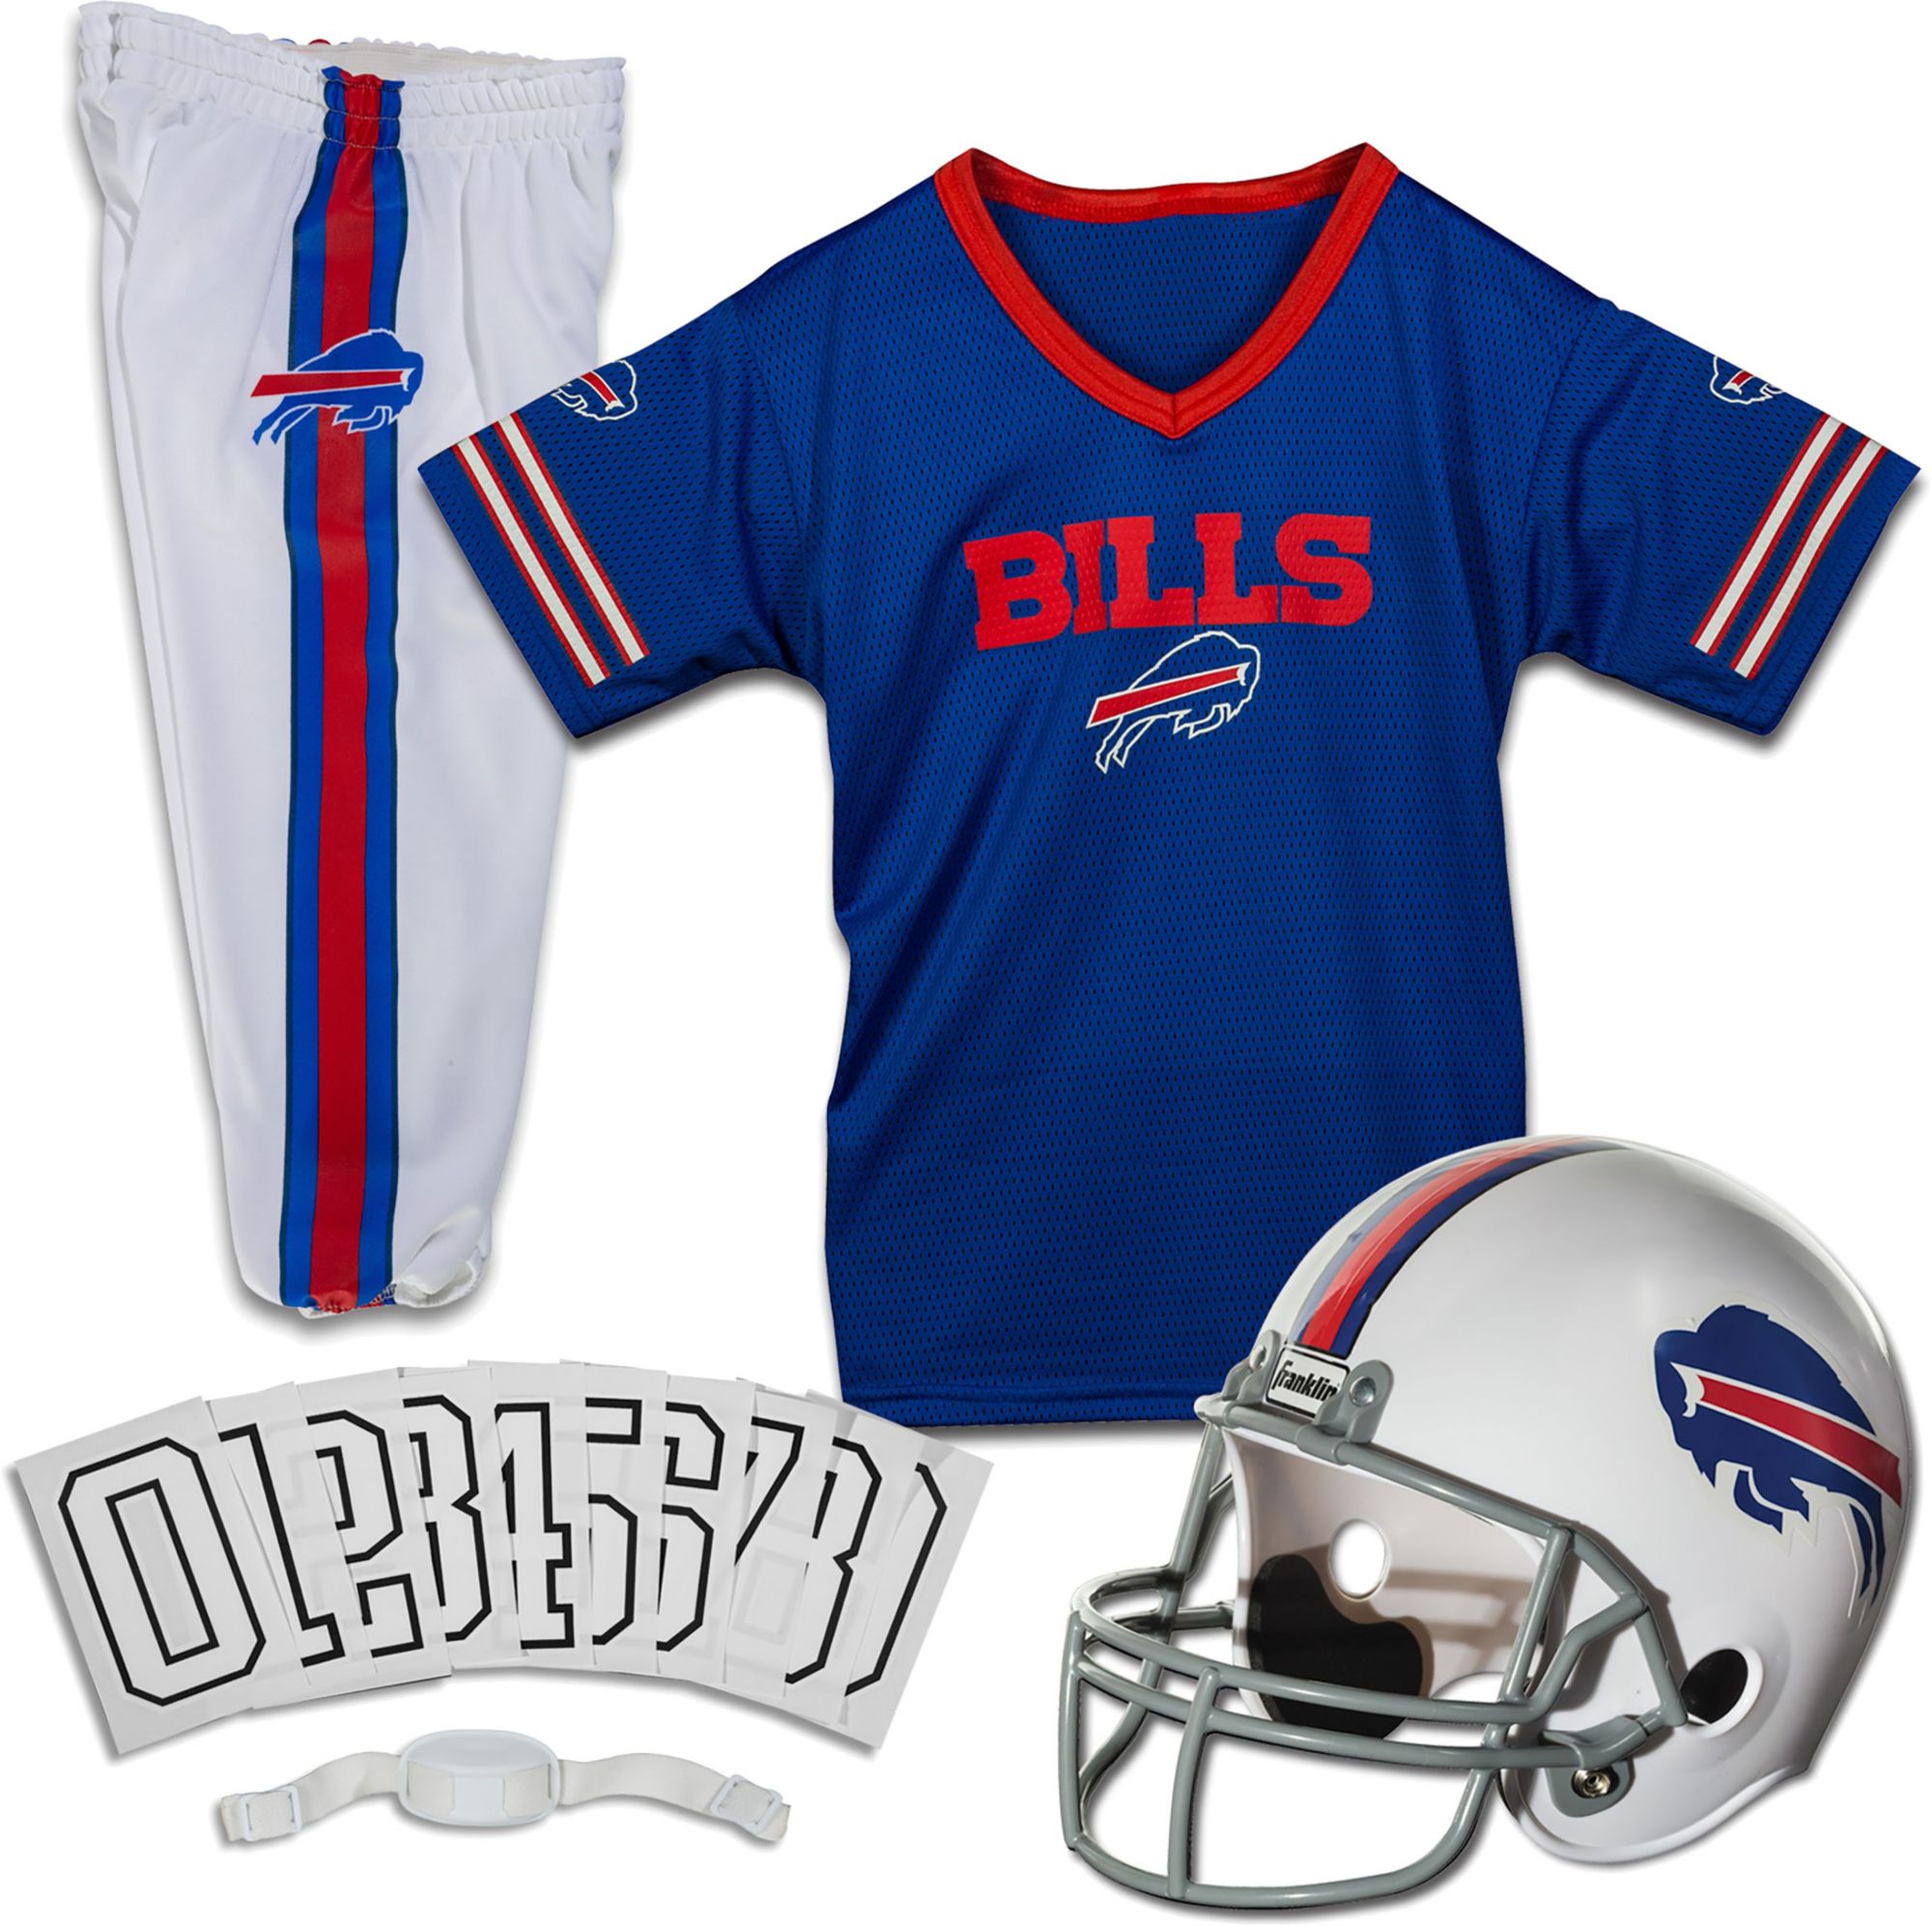 Buffalo Bills Youth Deluxe Uniform Set 